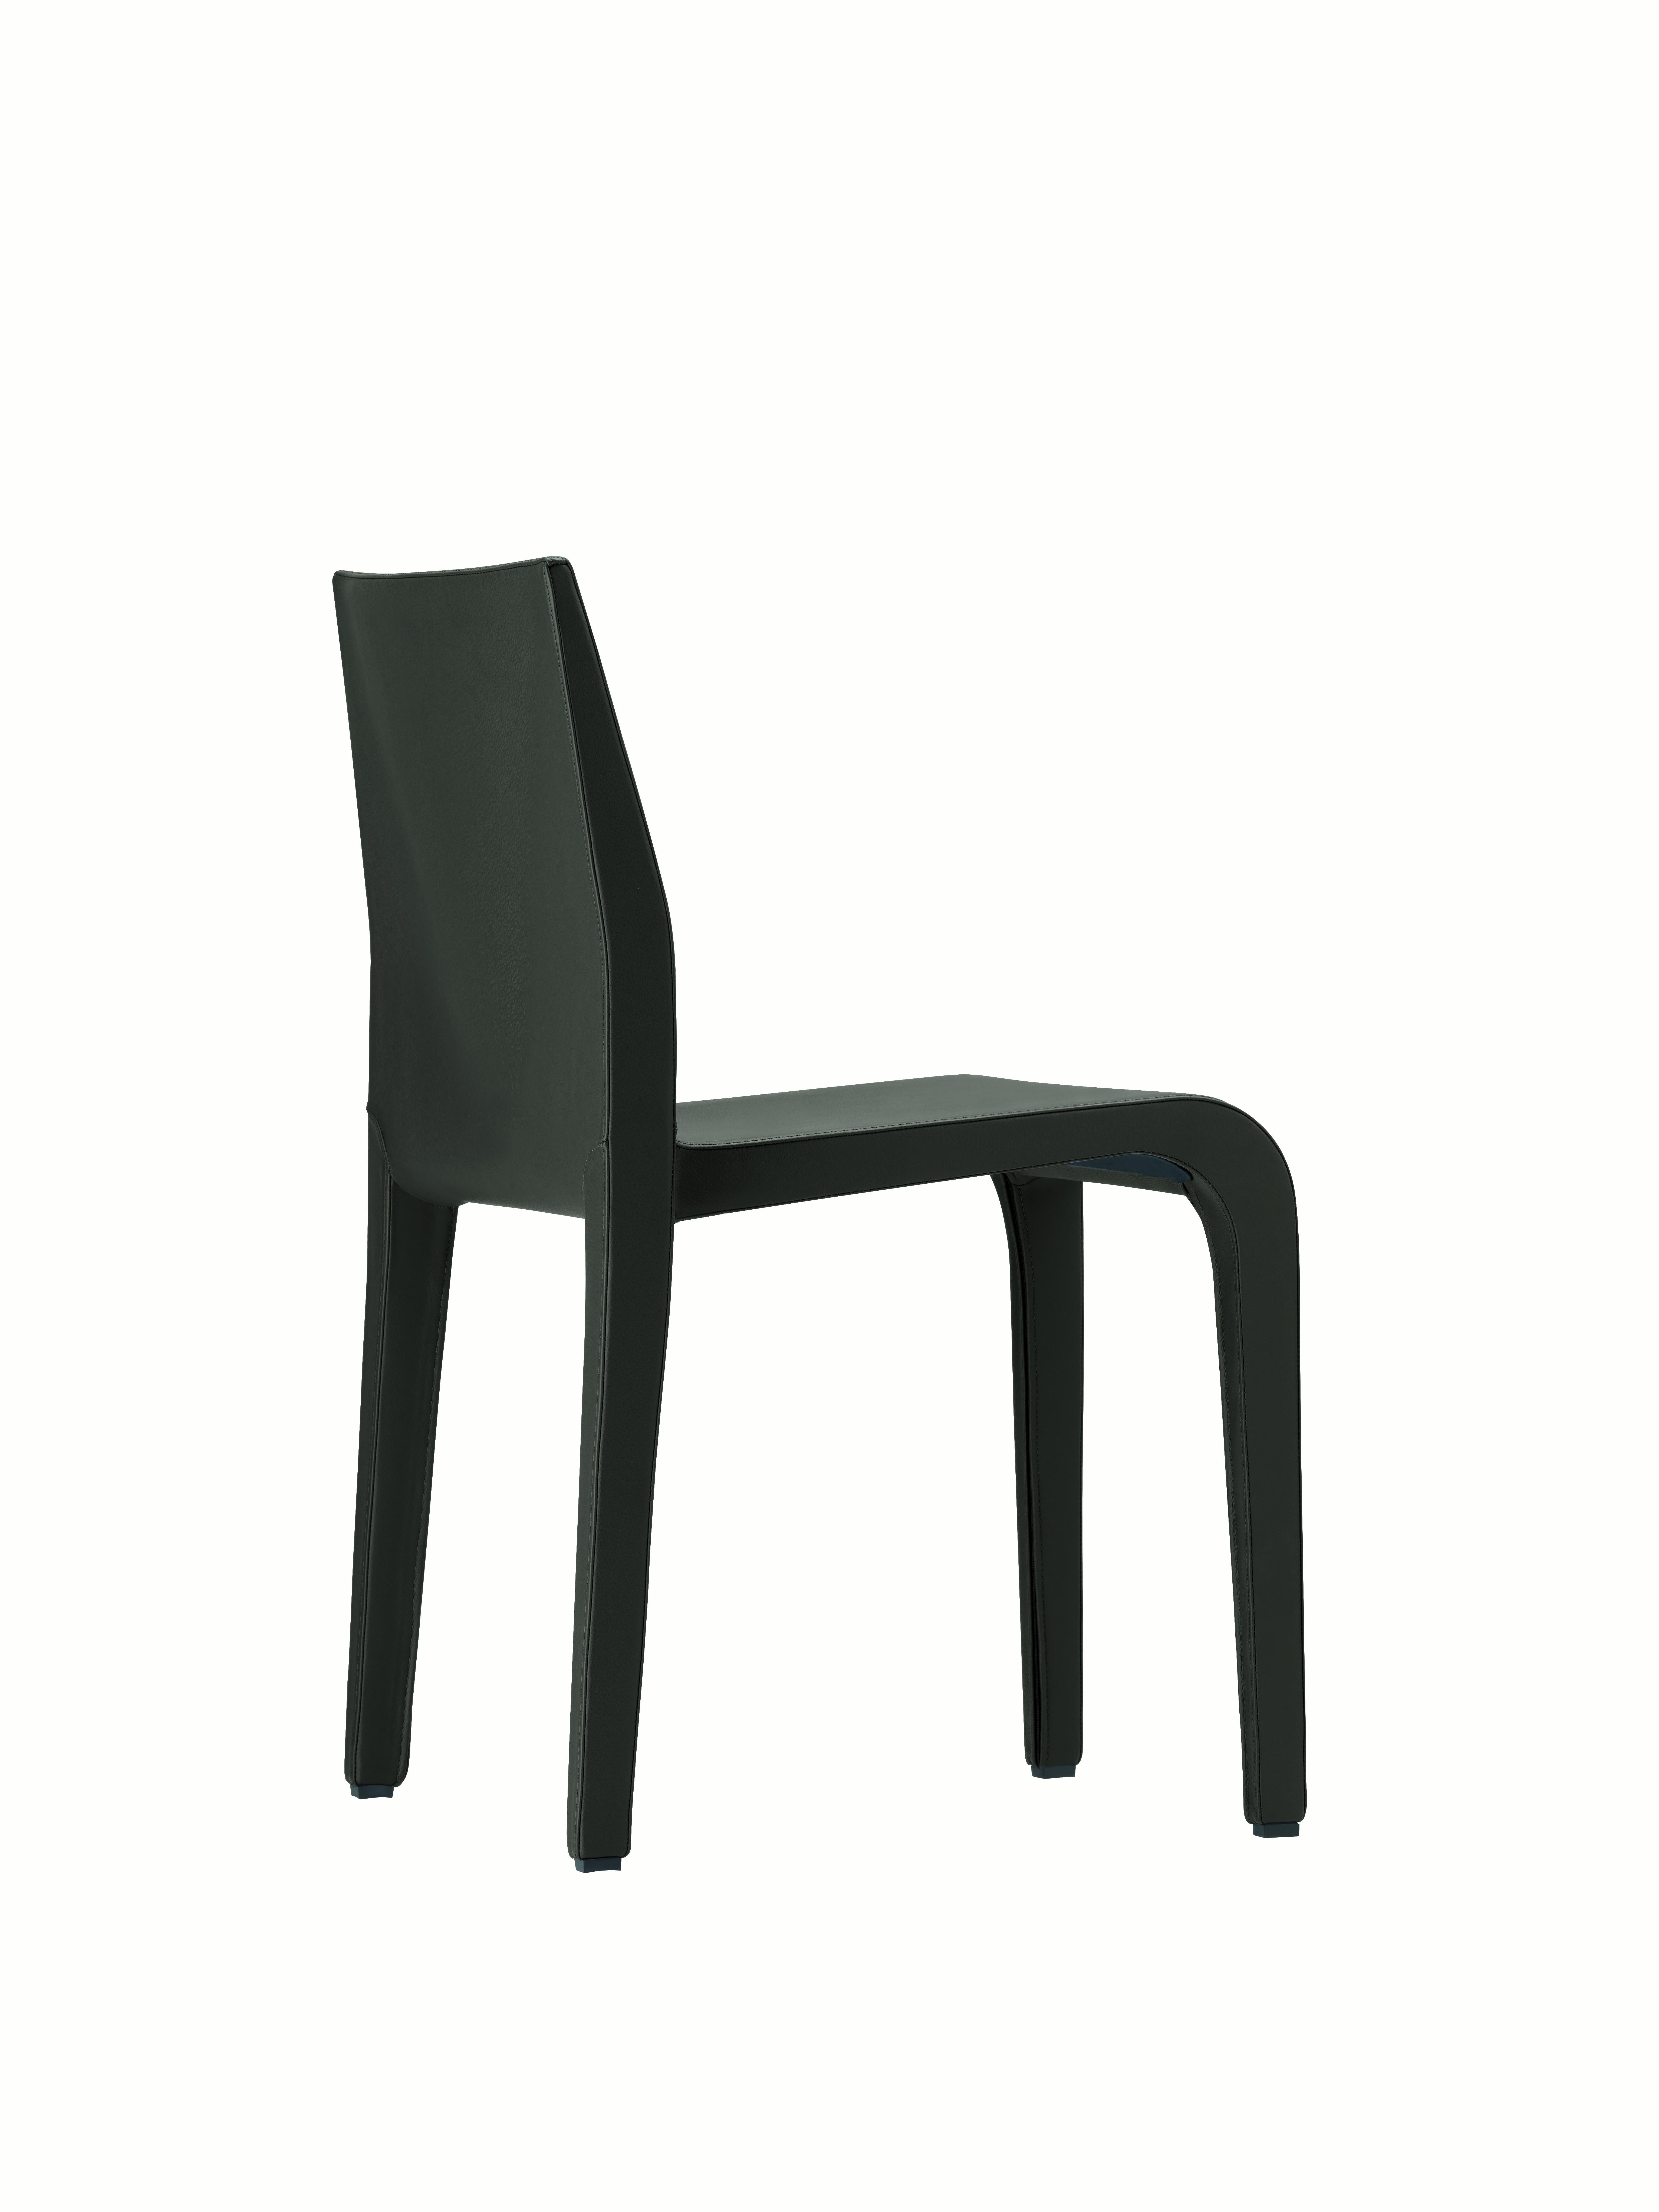 Italian Alias 301 Laleggera Chair in Full Dark Brown Leather by Riccardo Blumer For Sale